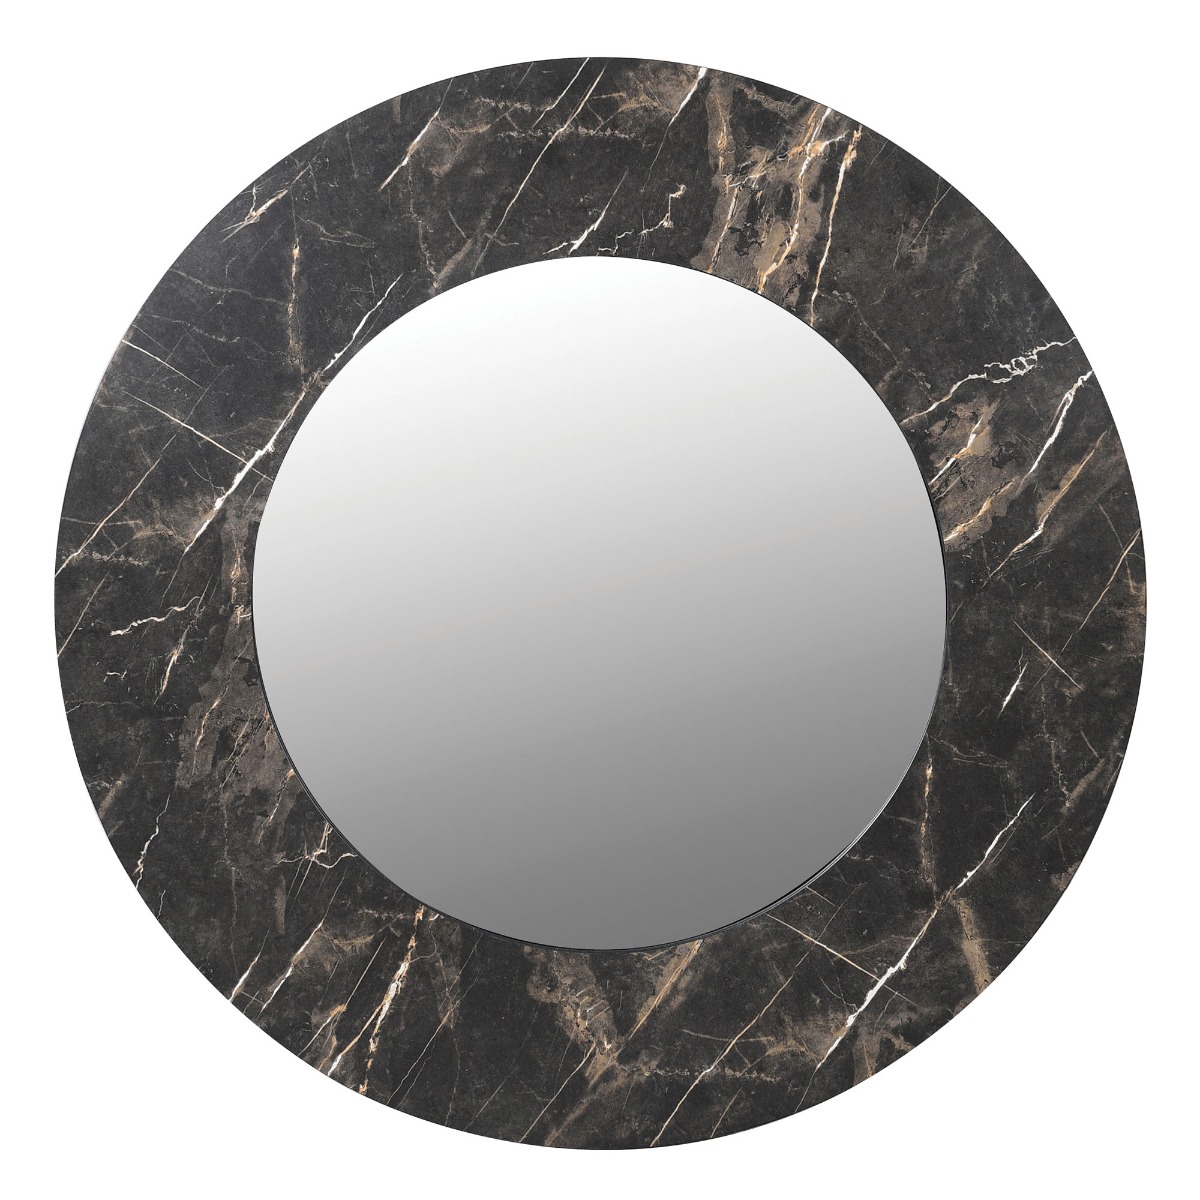 Marble Effect Mirror, Round | Barker & Stonehouse